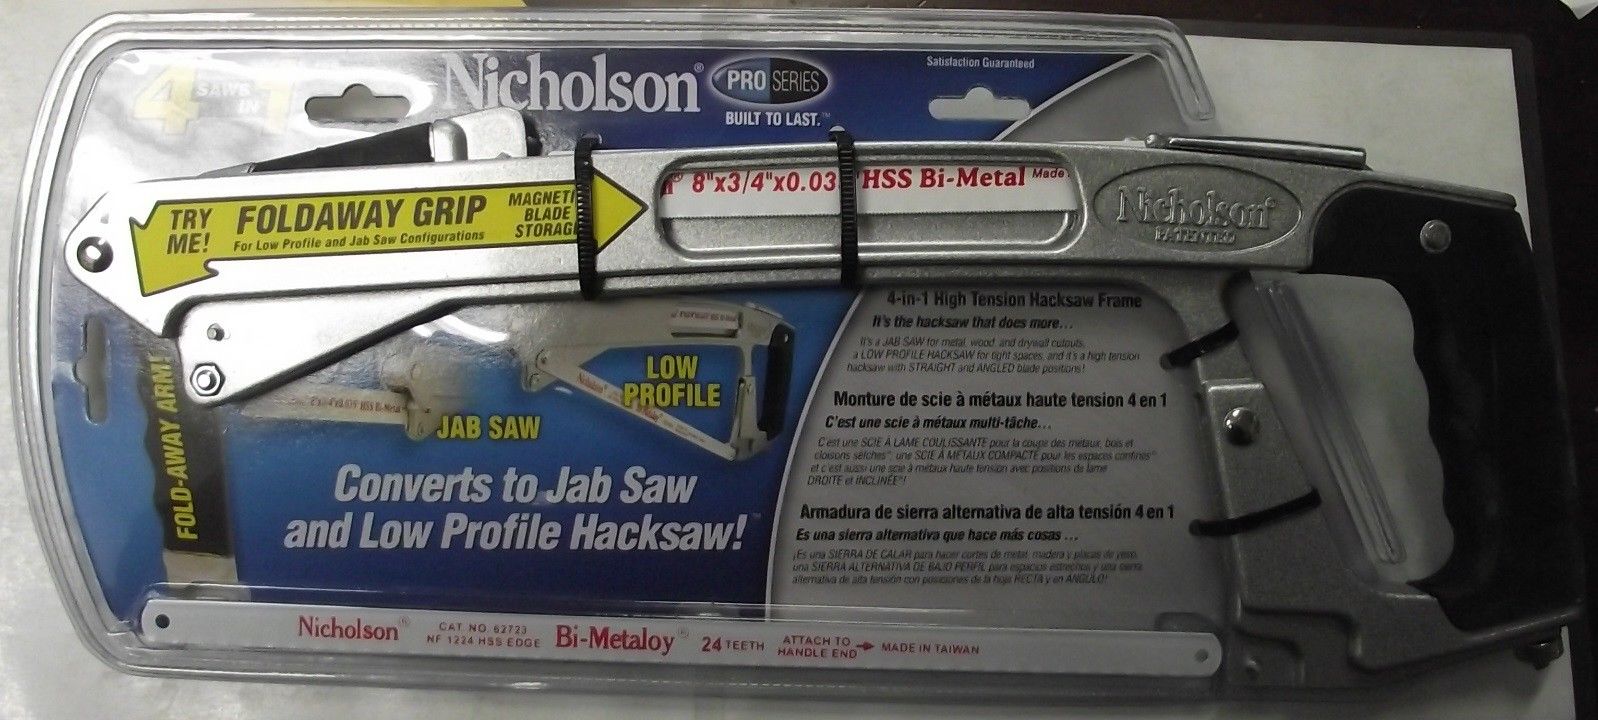 Nicholson 80975 4-in-1 Pro Series High Tension Hacksaw Frame